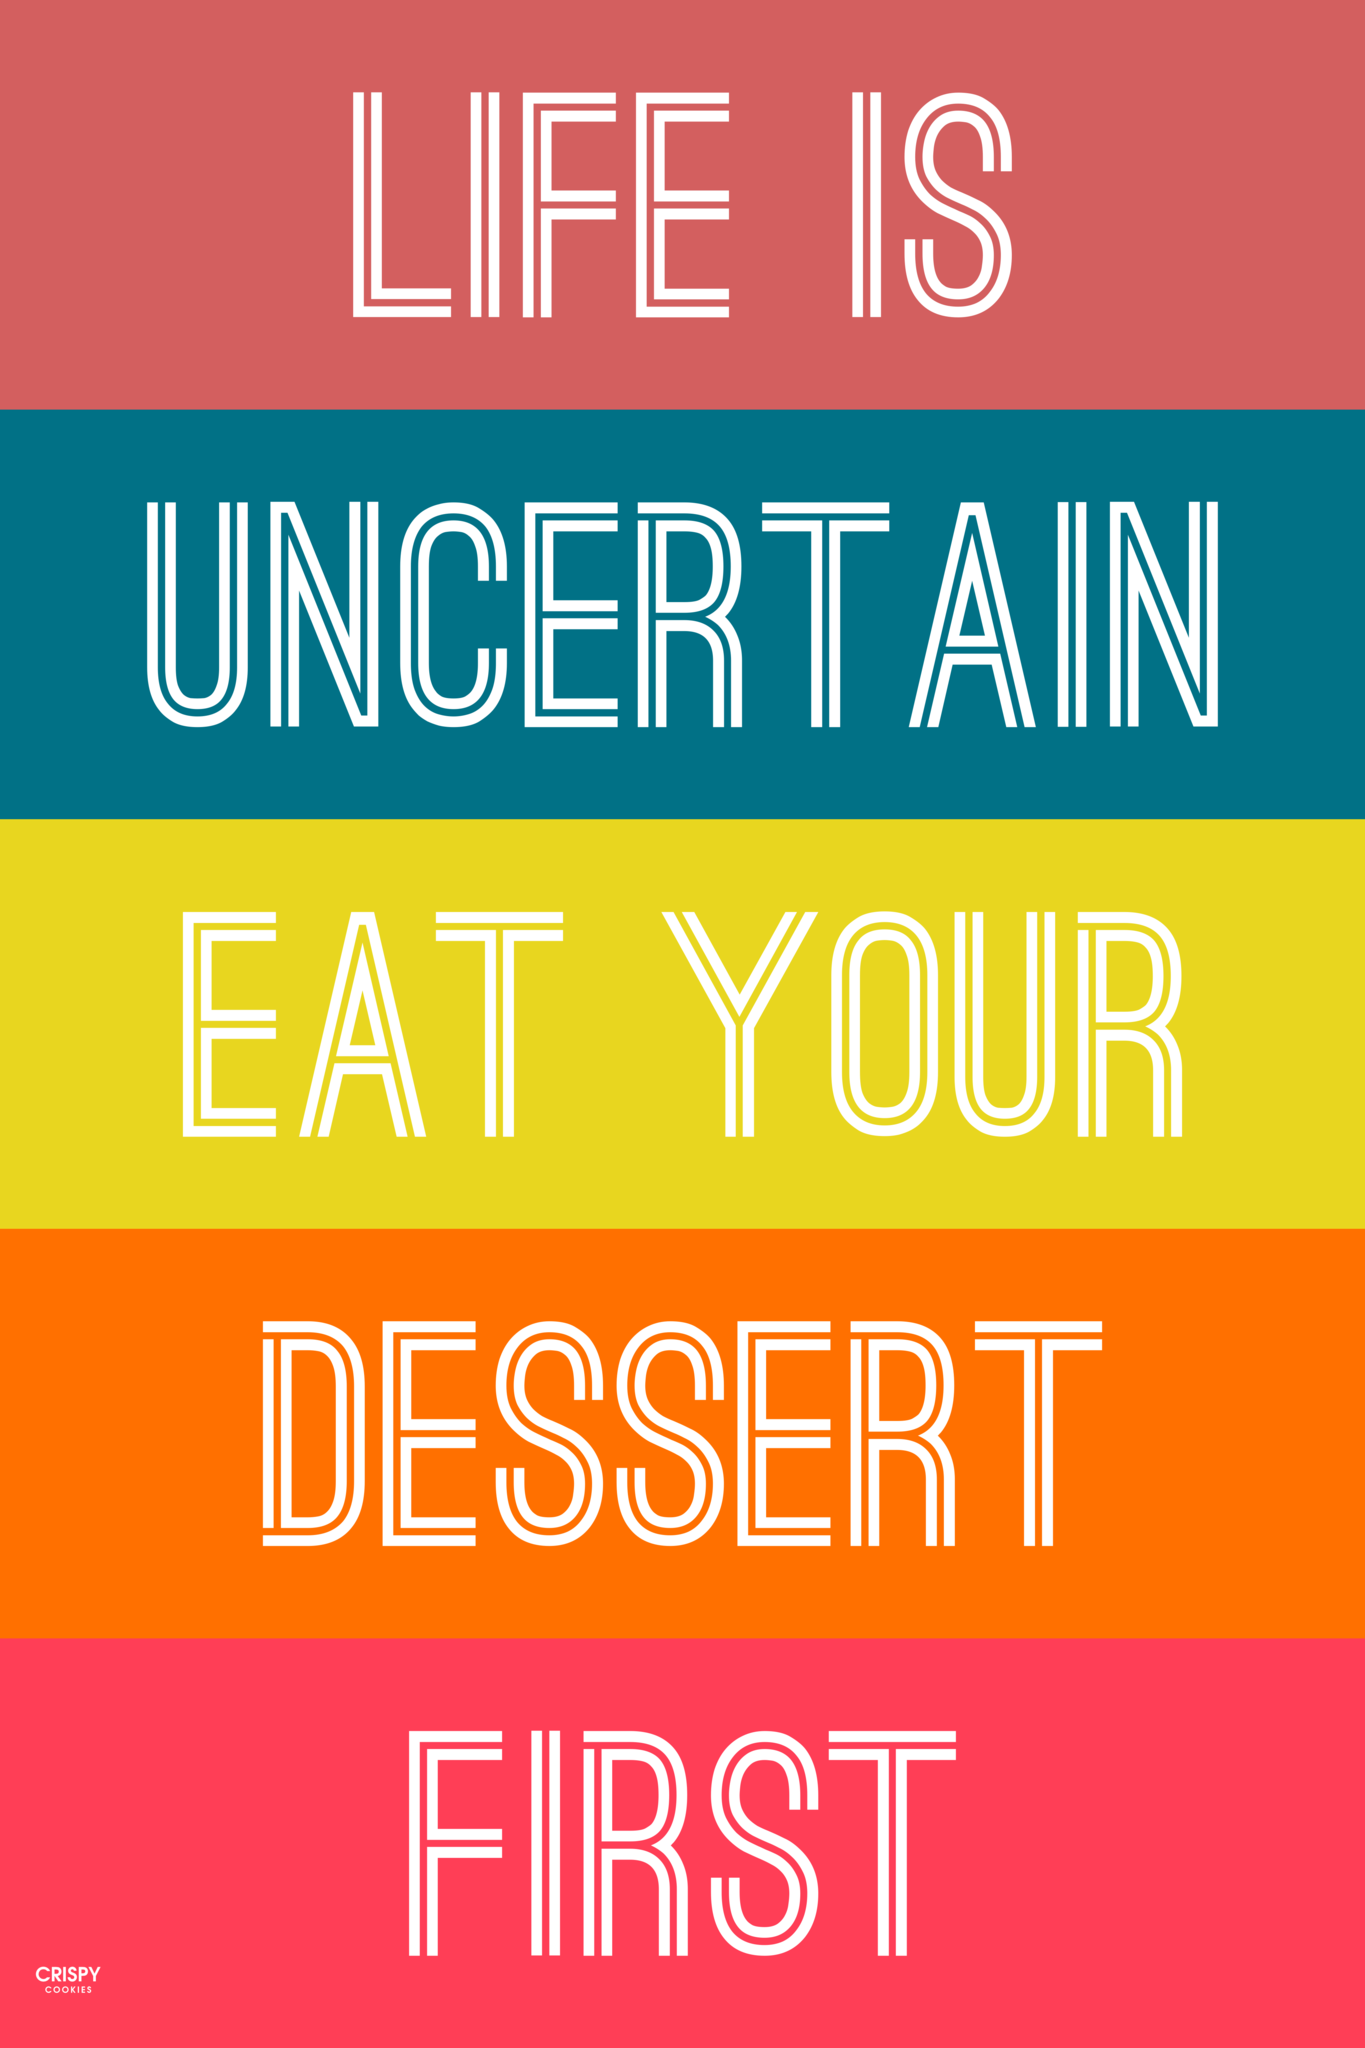 Wall Art, Eat Your Dessert, - PosterGully